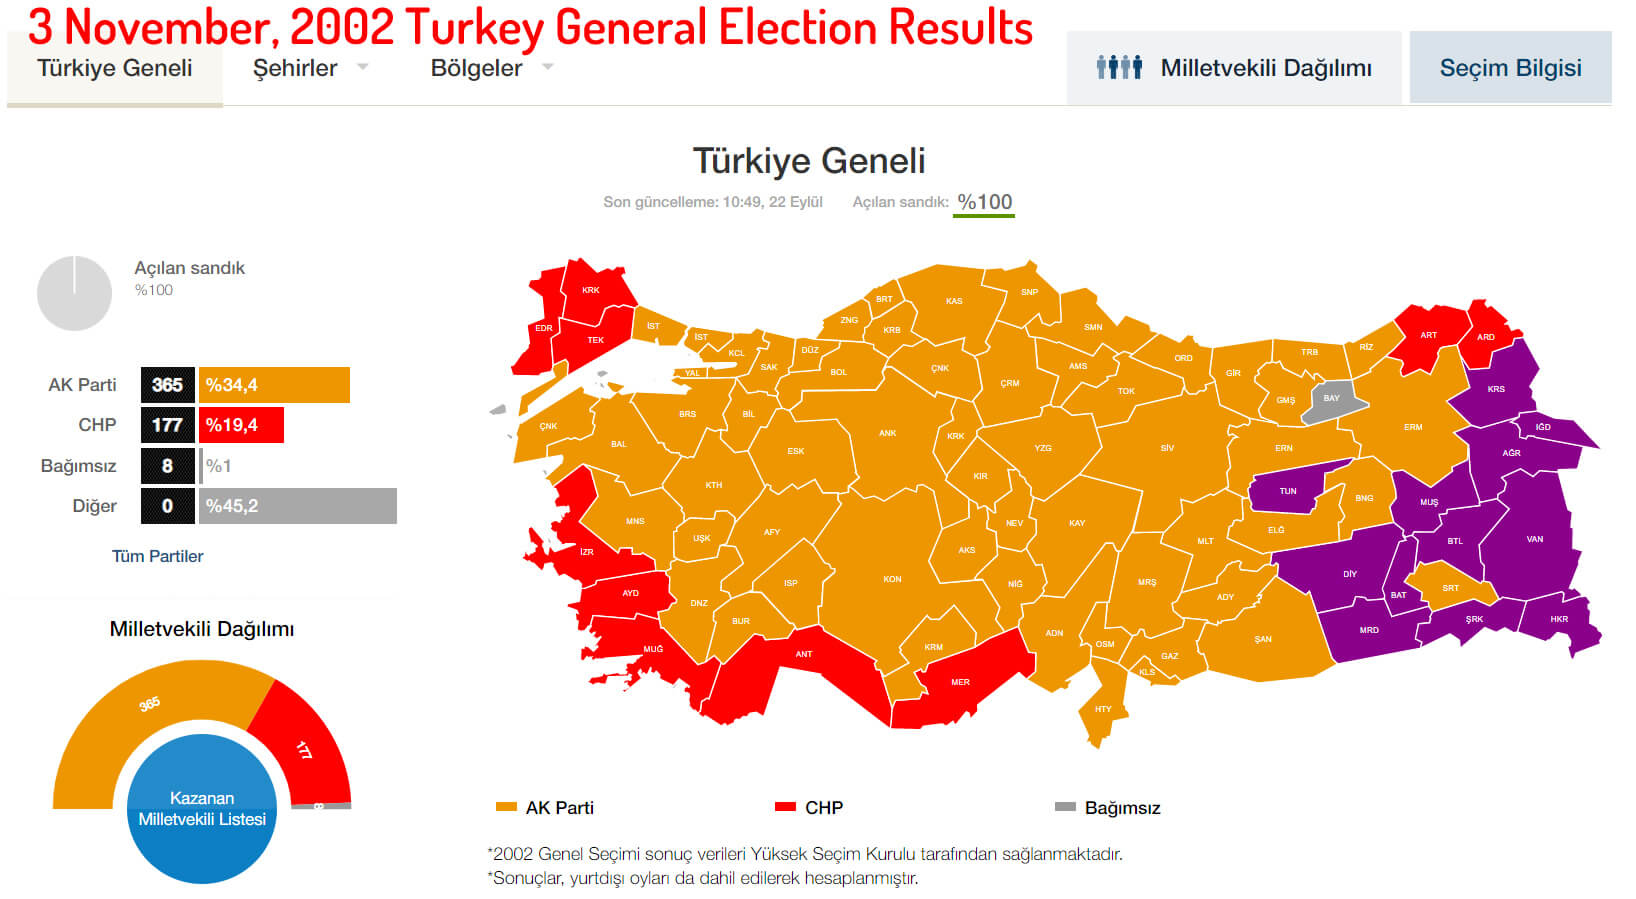 3 November, 2002 Turkey General Election Results